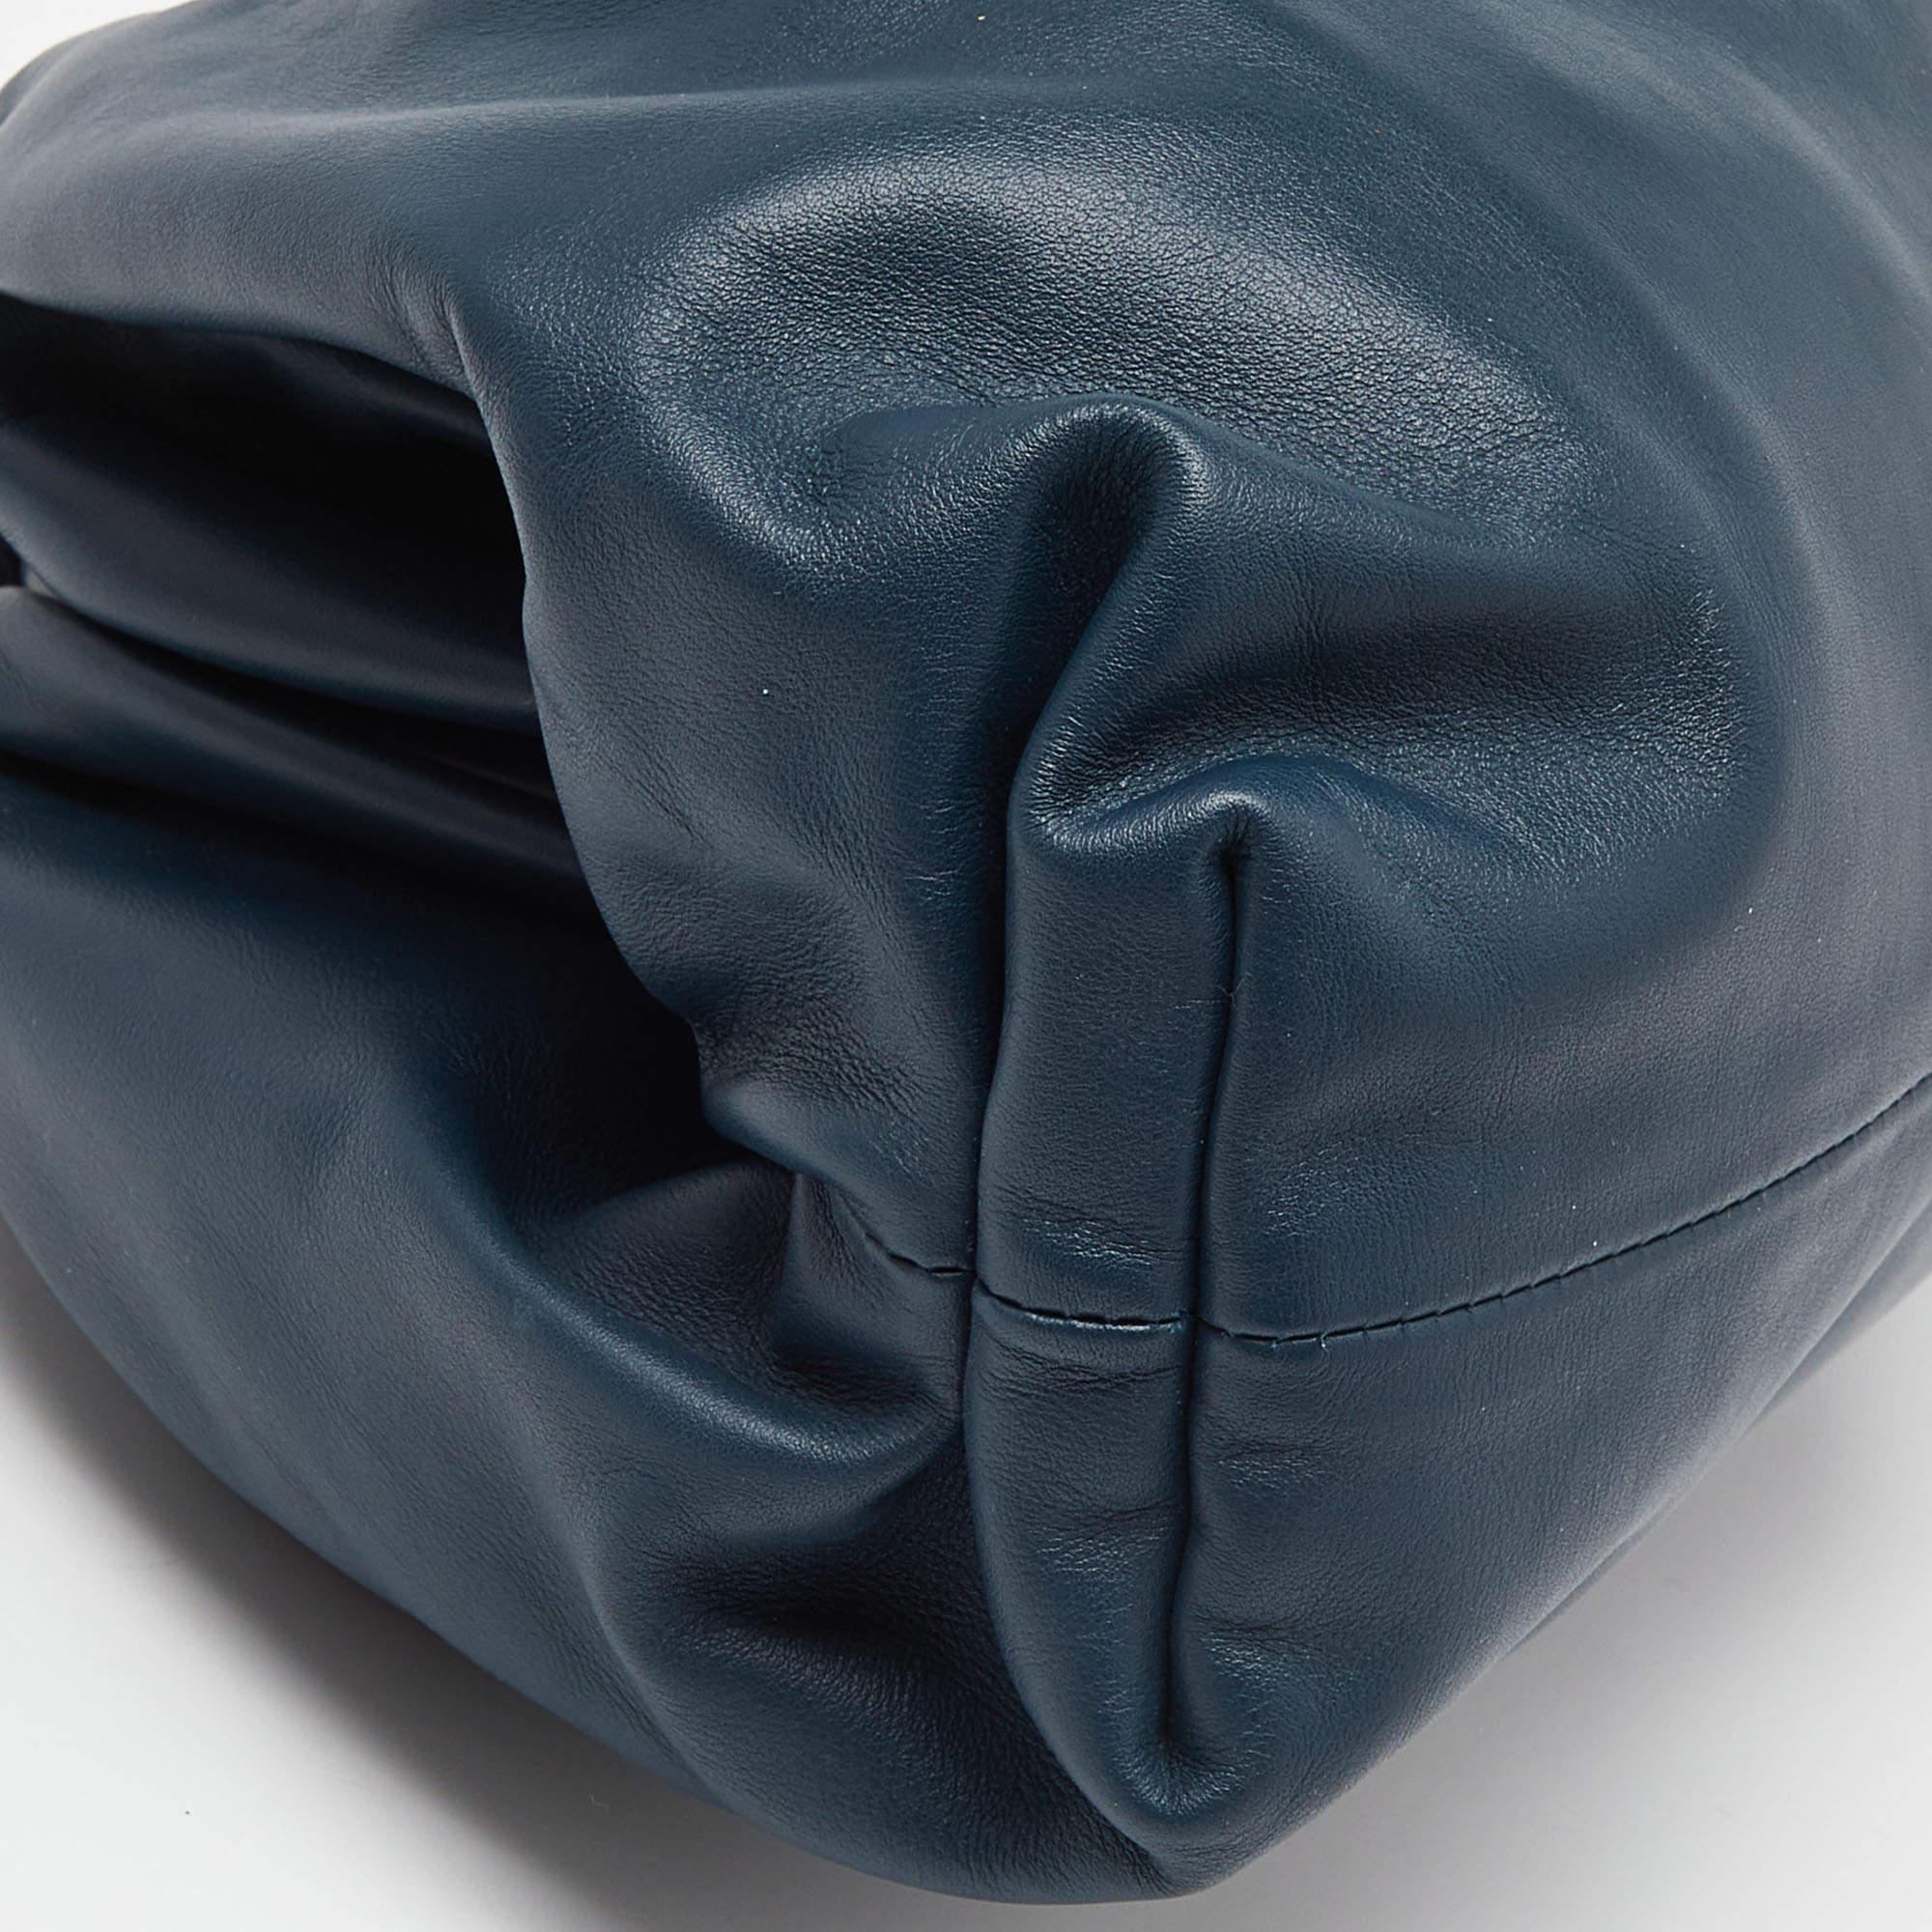 Bottega Veneta Teal Blue Leather The Pouch Clutch For Sale 2